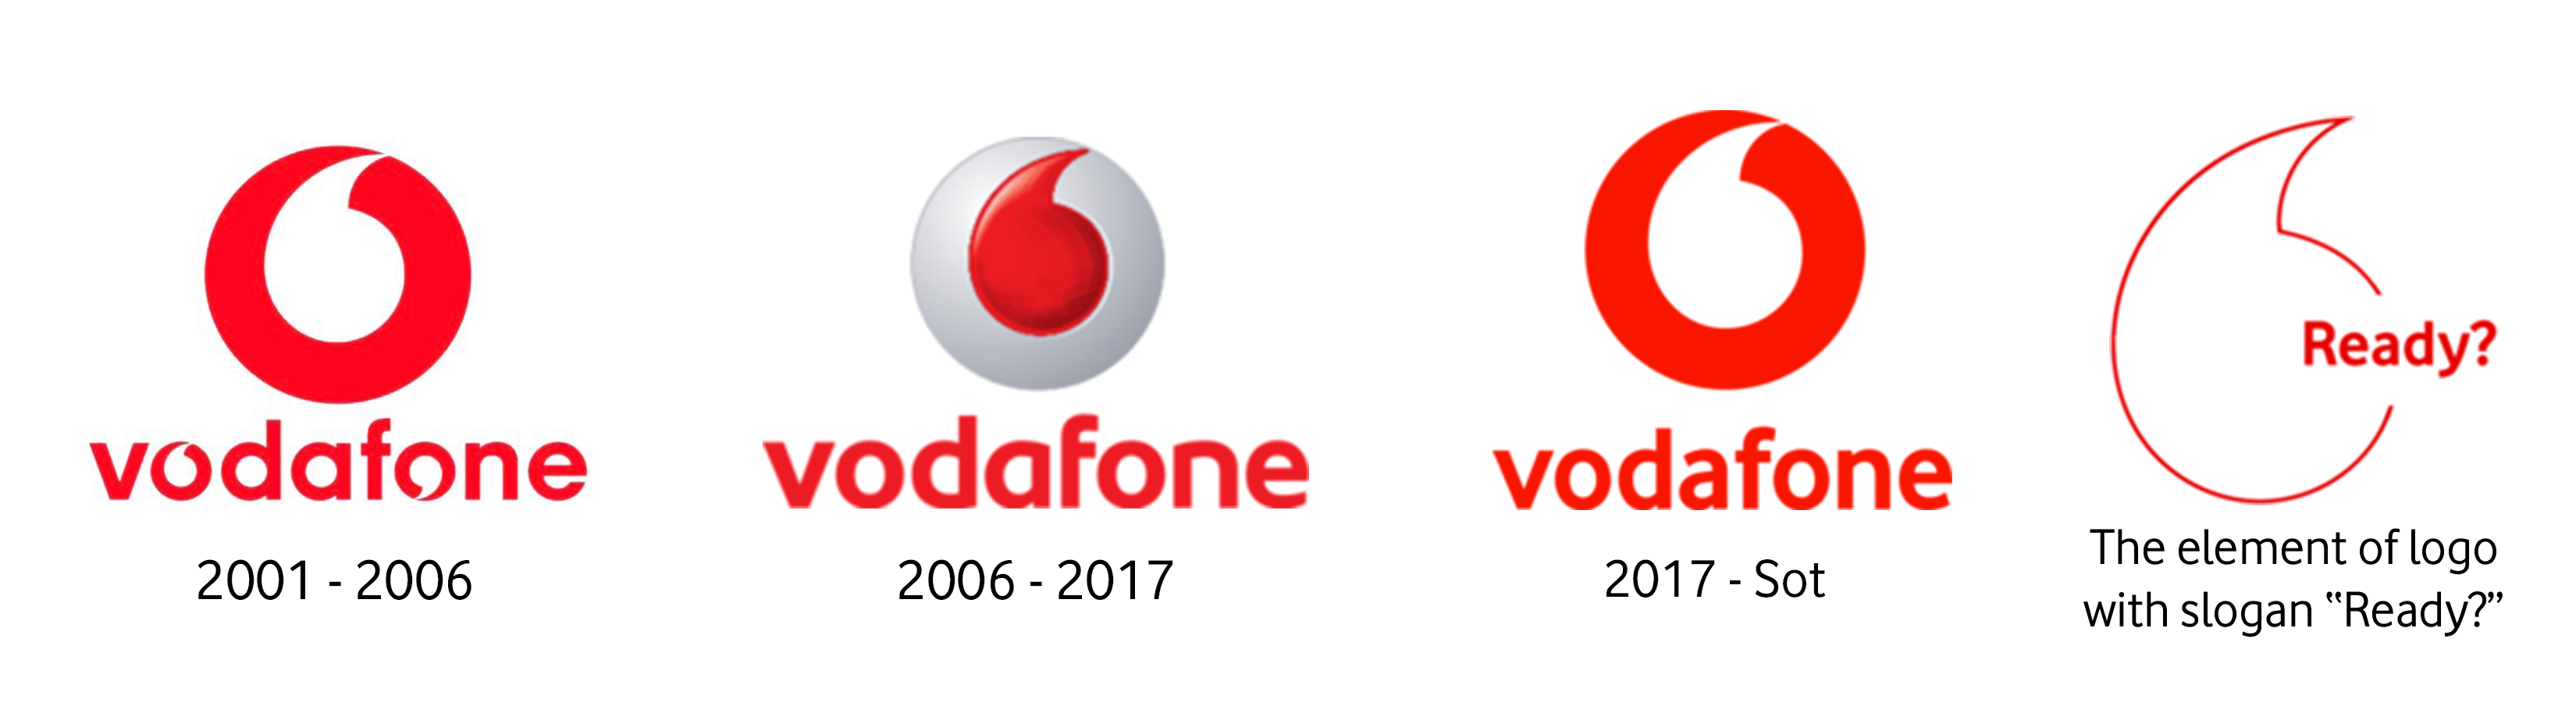 Vodafone logos since 2001